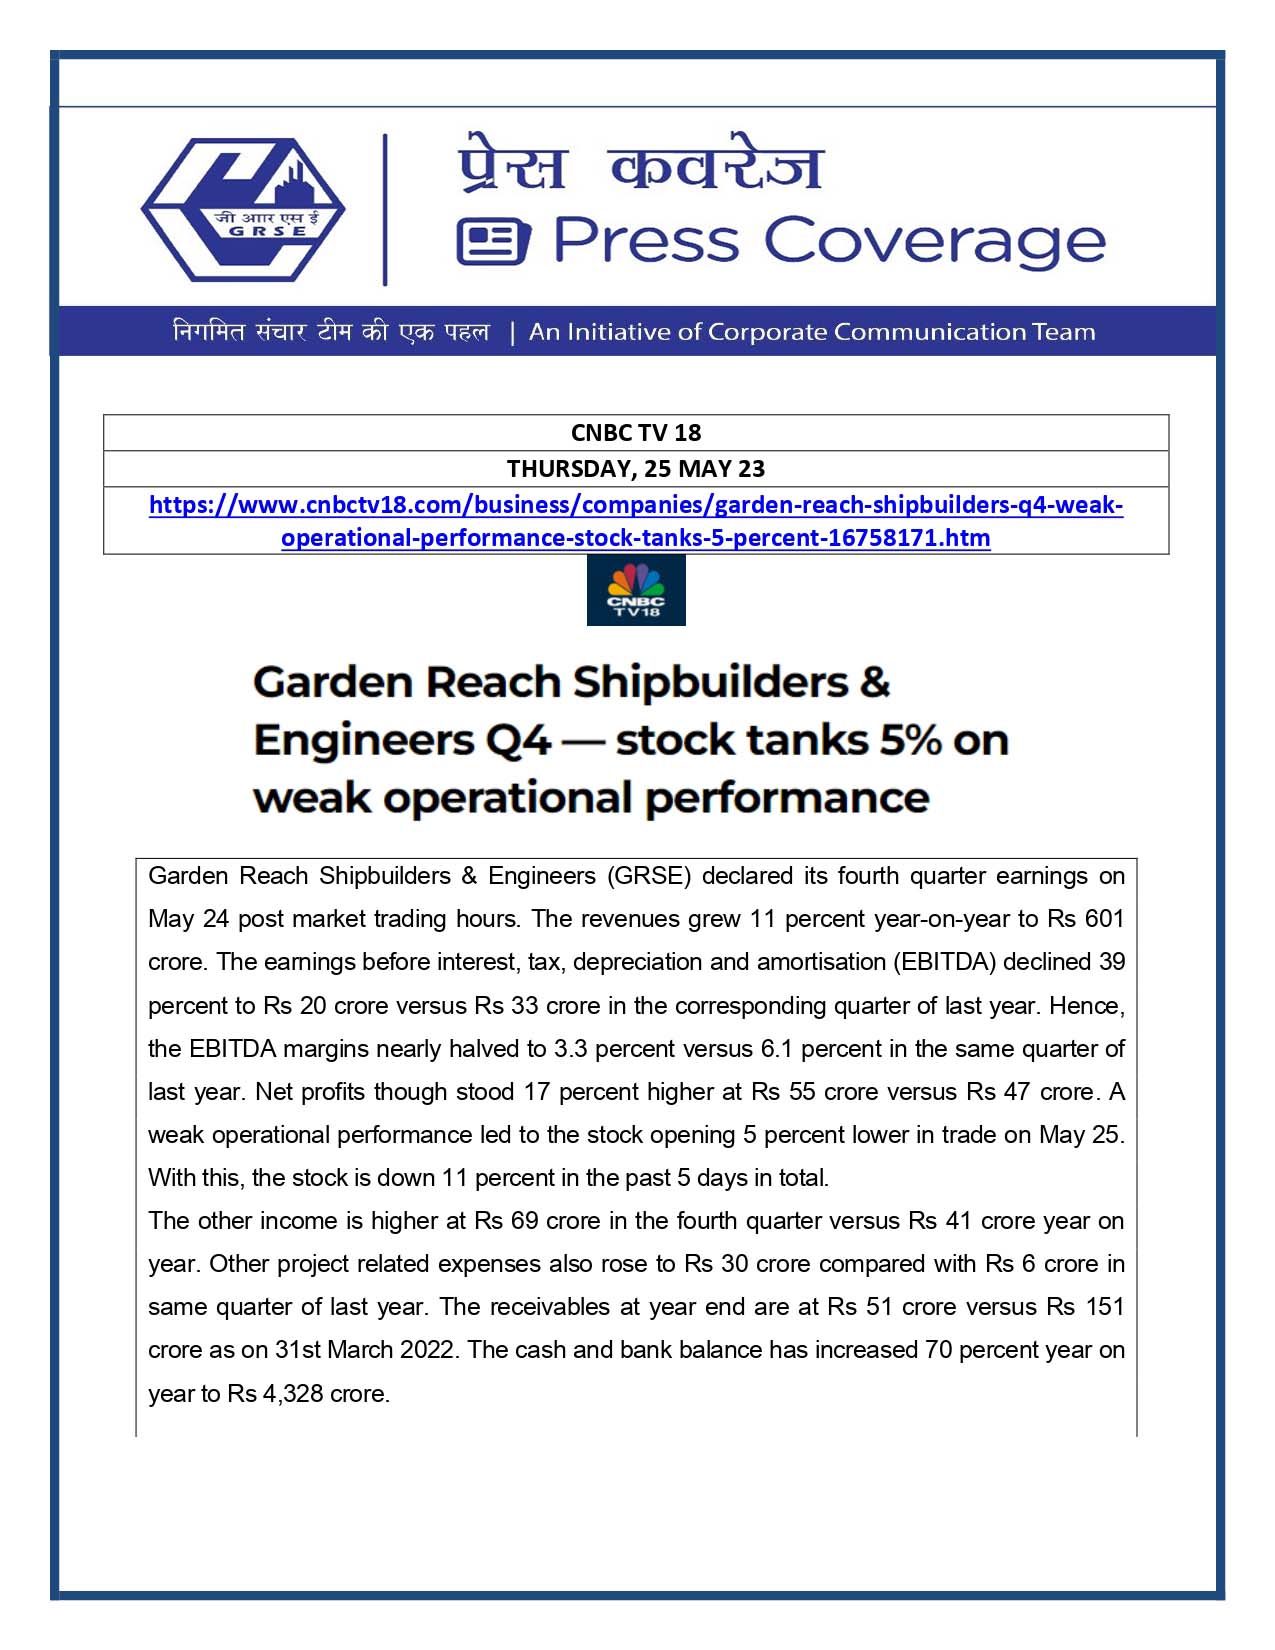 Garden Reach Shipbuilders & Engineers Q4 - stock tanks 5% on weak operational performance